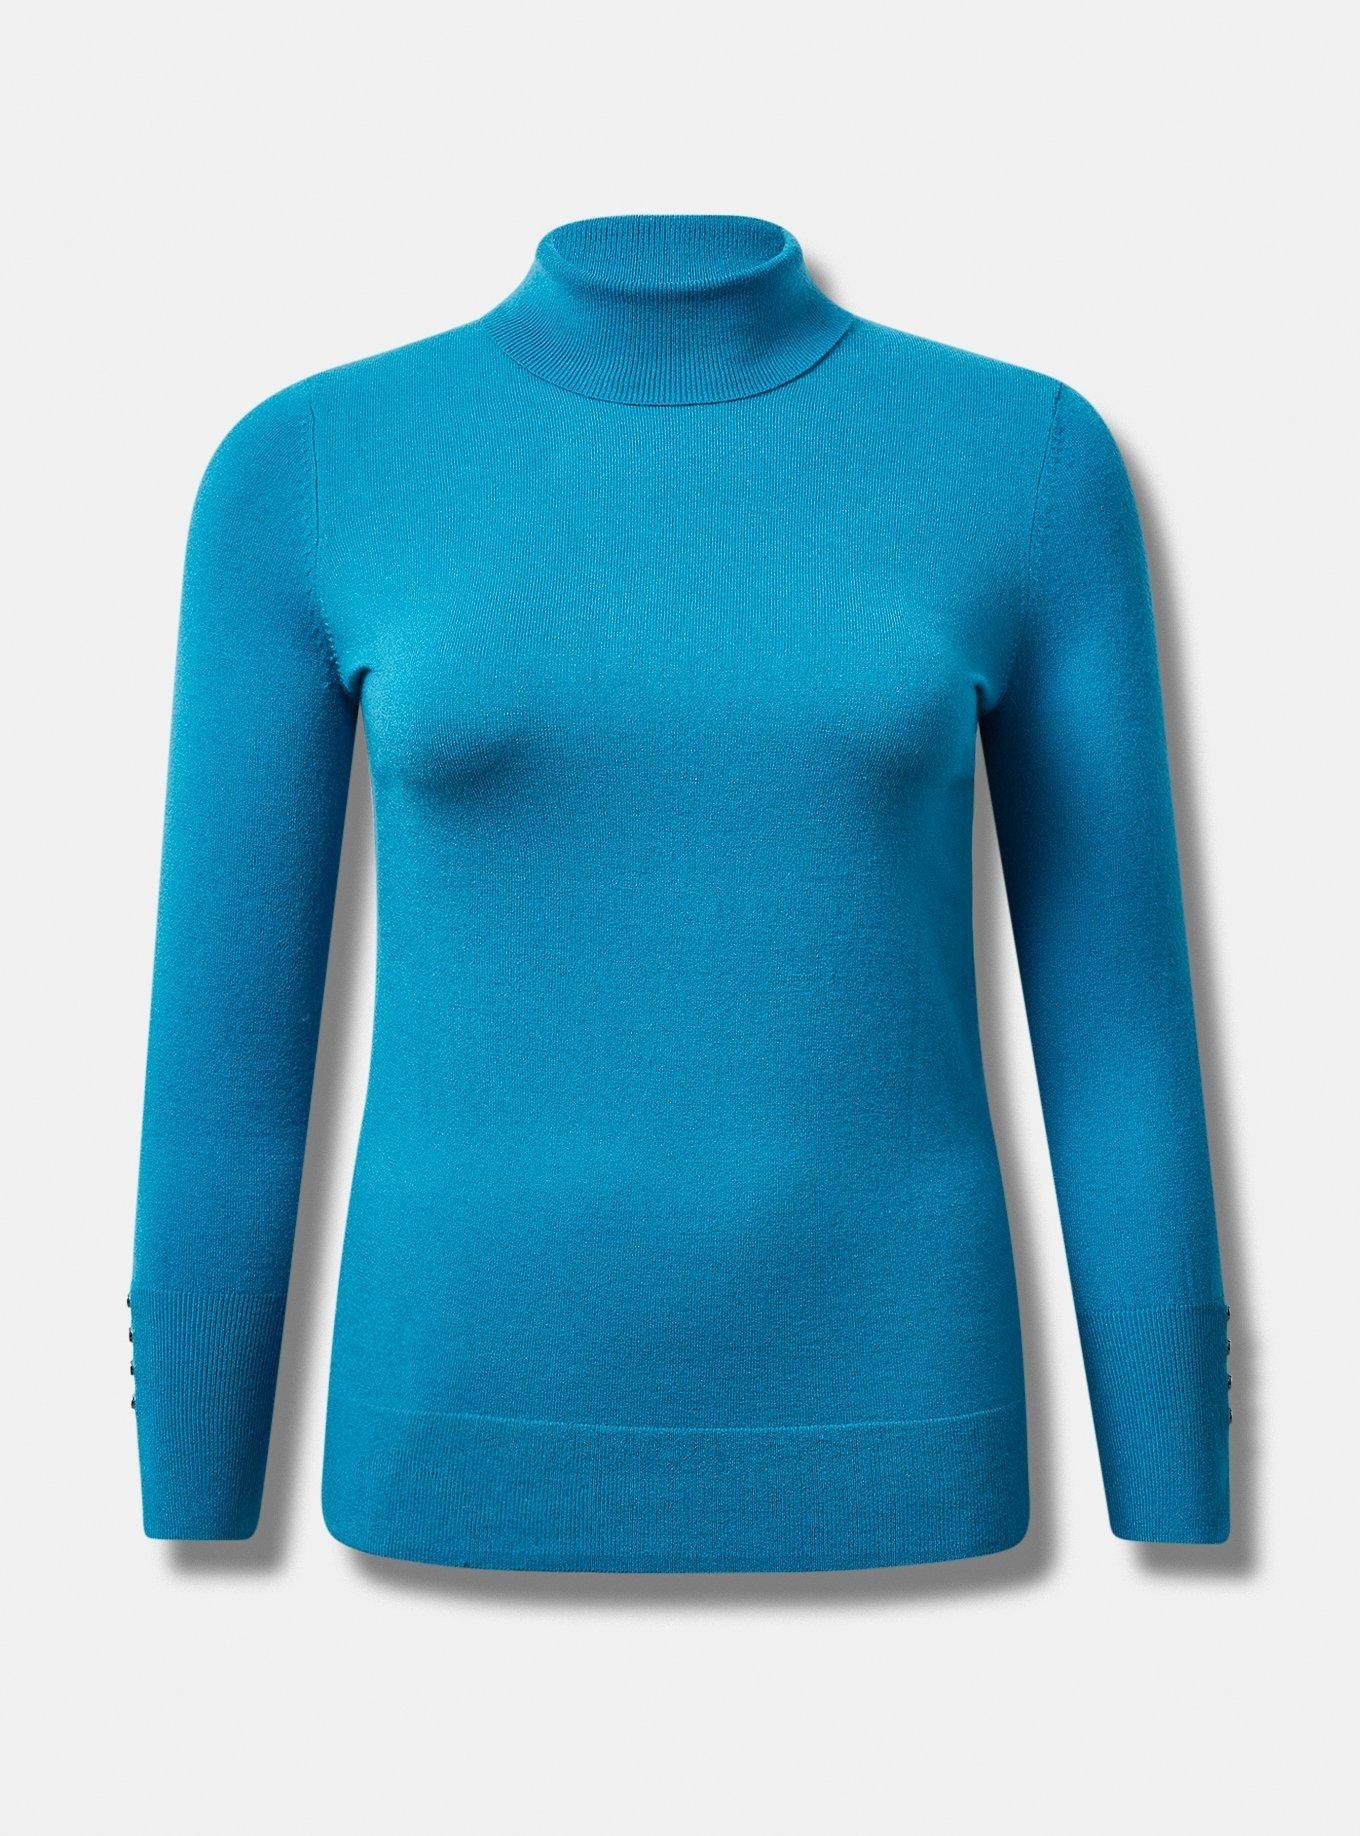 Plus Size - Everyday Soft Turtleneck Sweater - Torrid